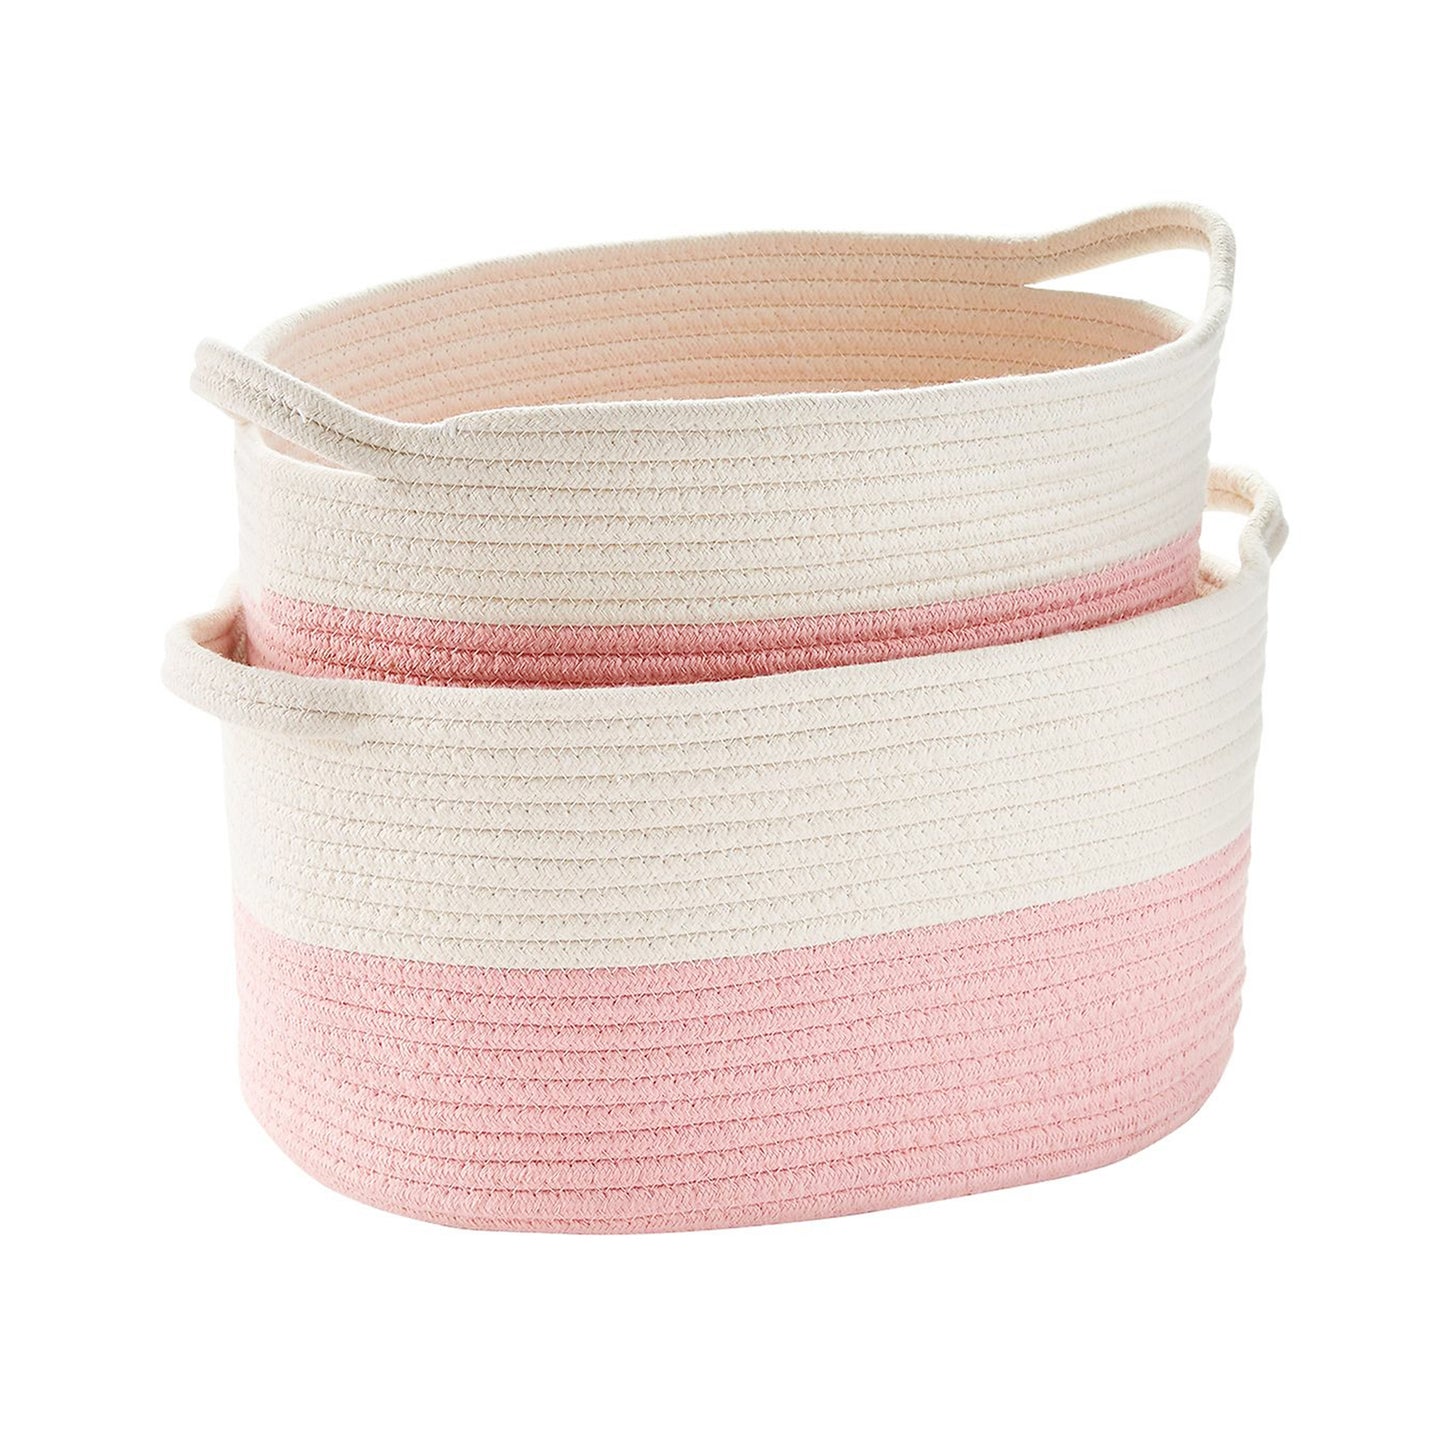 Blush Cotton Rope Storage Basket with Handles (M)